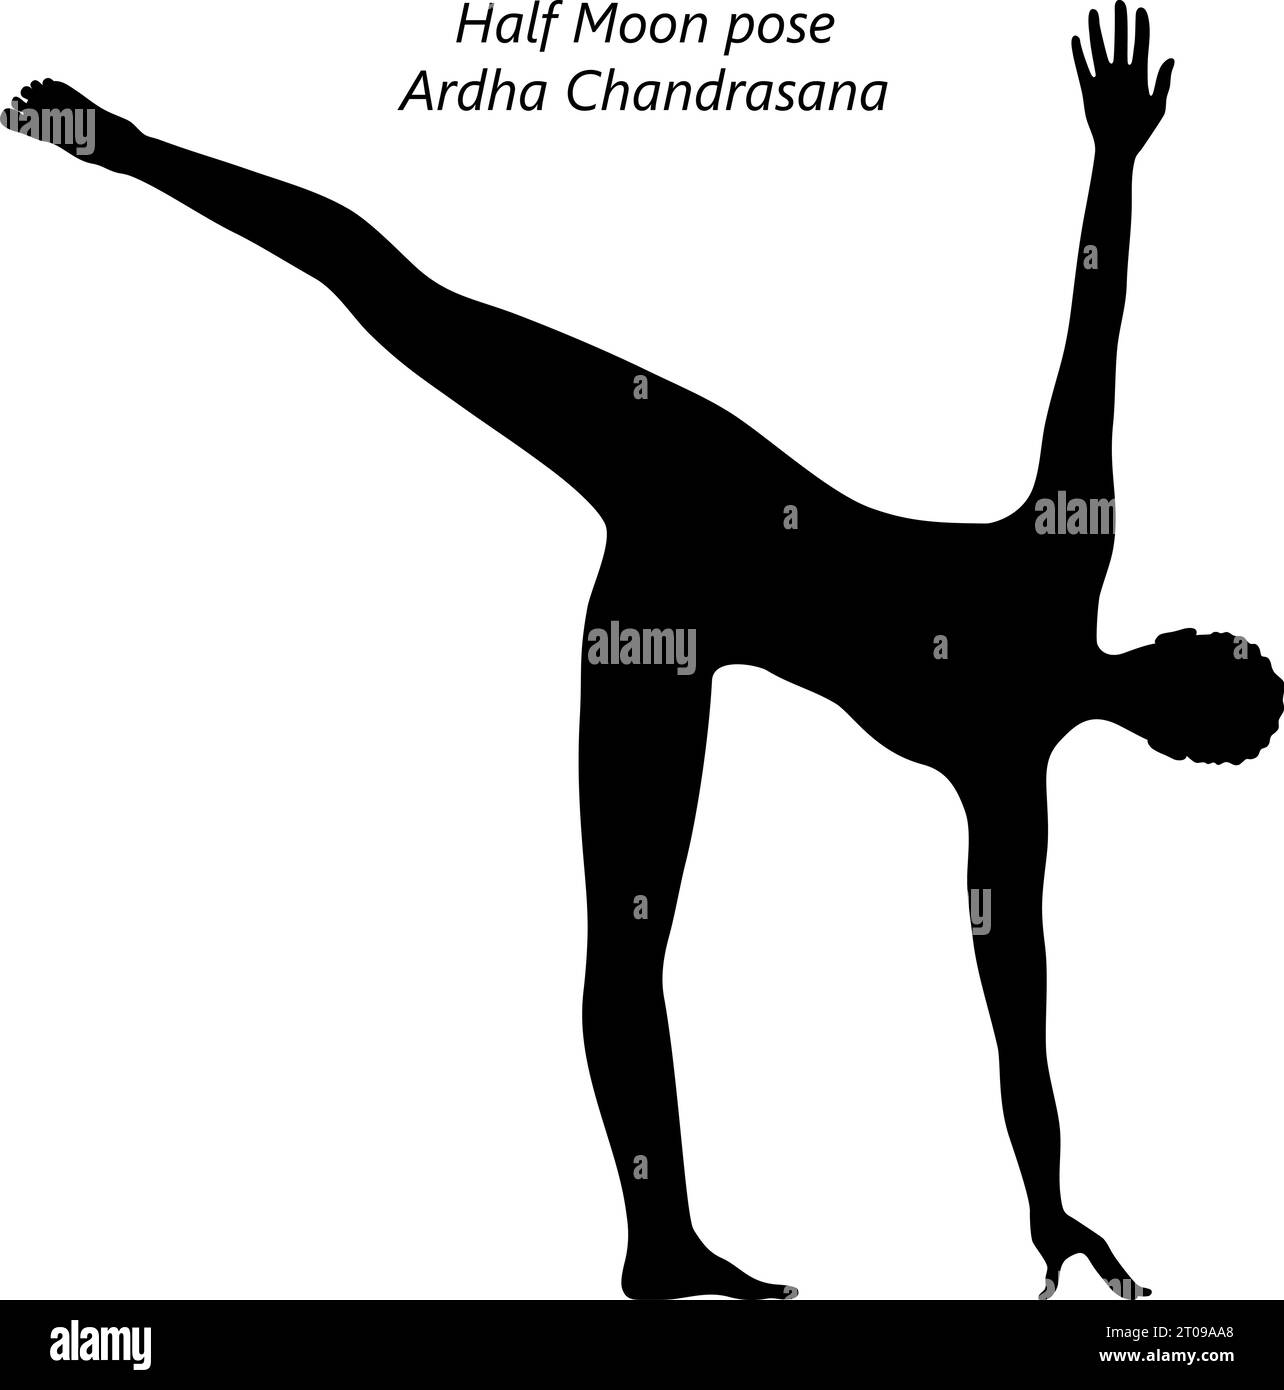 Silhouette of woman doing yoga Half Moon pose or Ardha Chandrasana. Intermediate Difficulty. Isolated vector illustration. Stock Vector